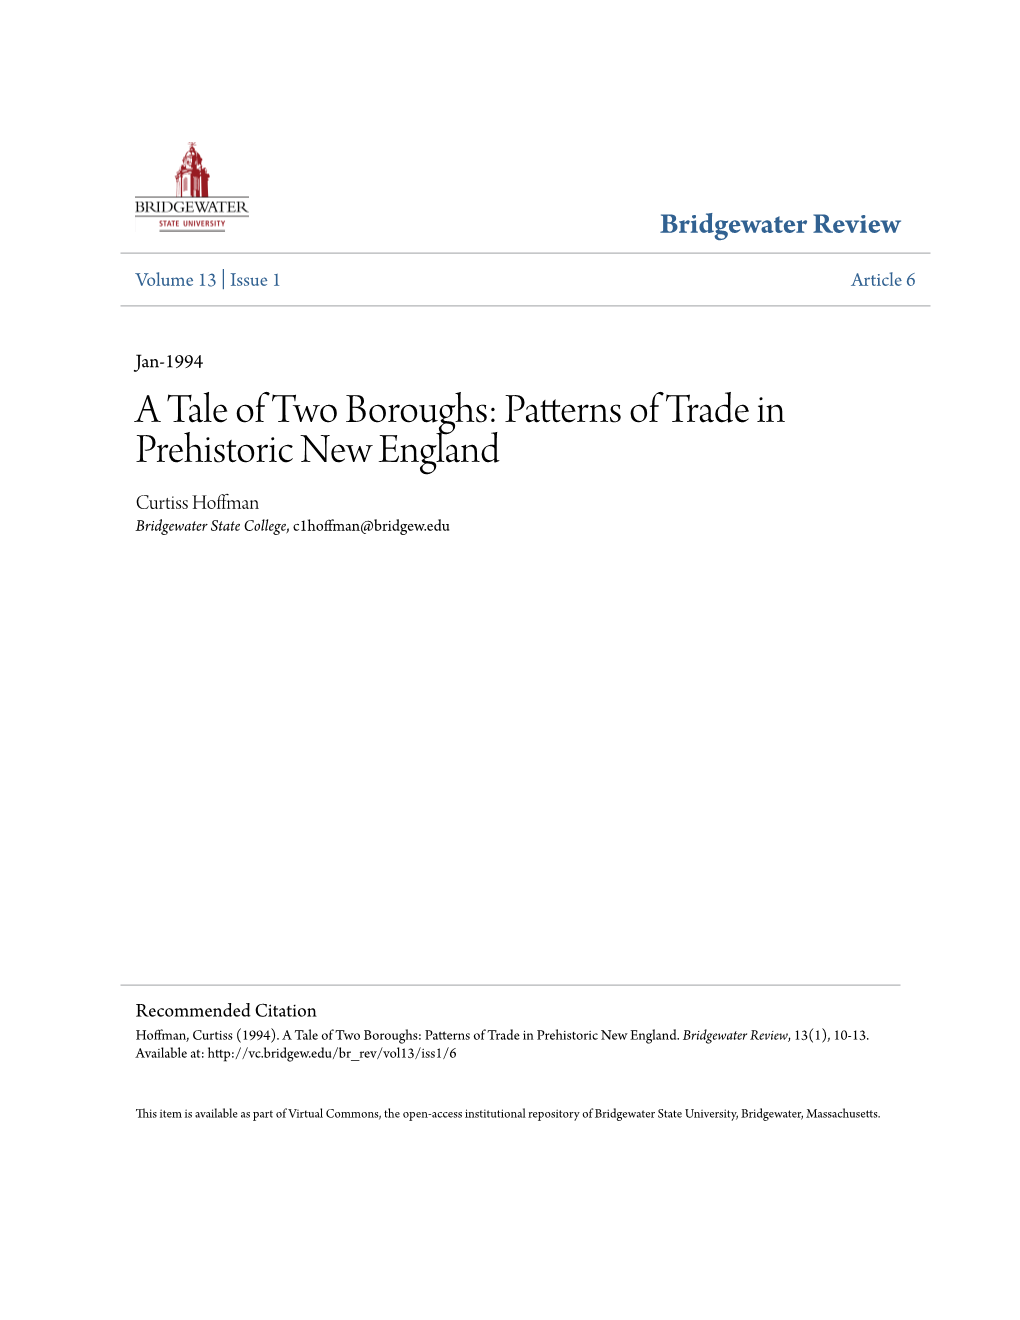 Patterns of Trade in Prehistoric New England Curtiss Hoffman Bridgewater State College, C1hoffman@Bridgew.Edu